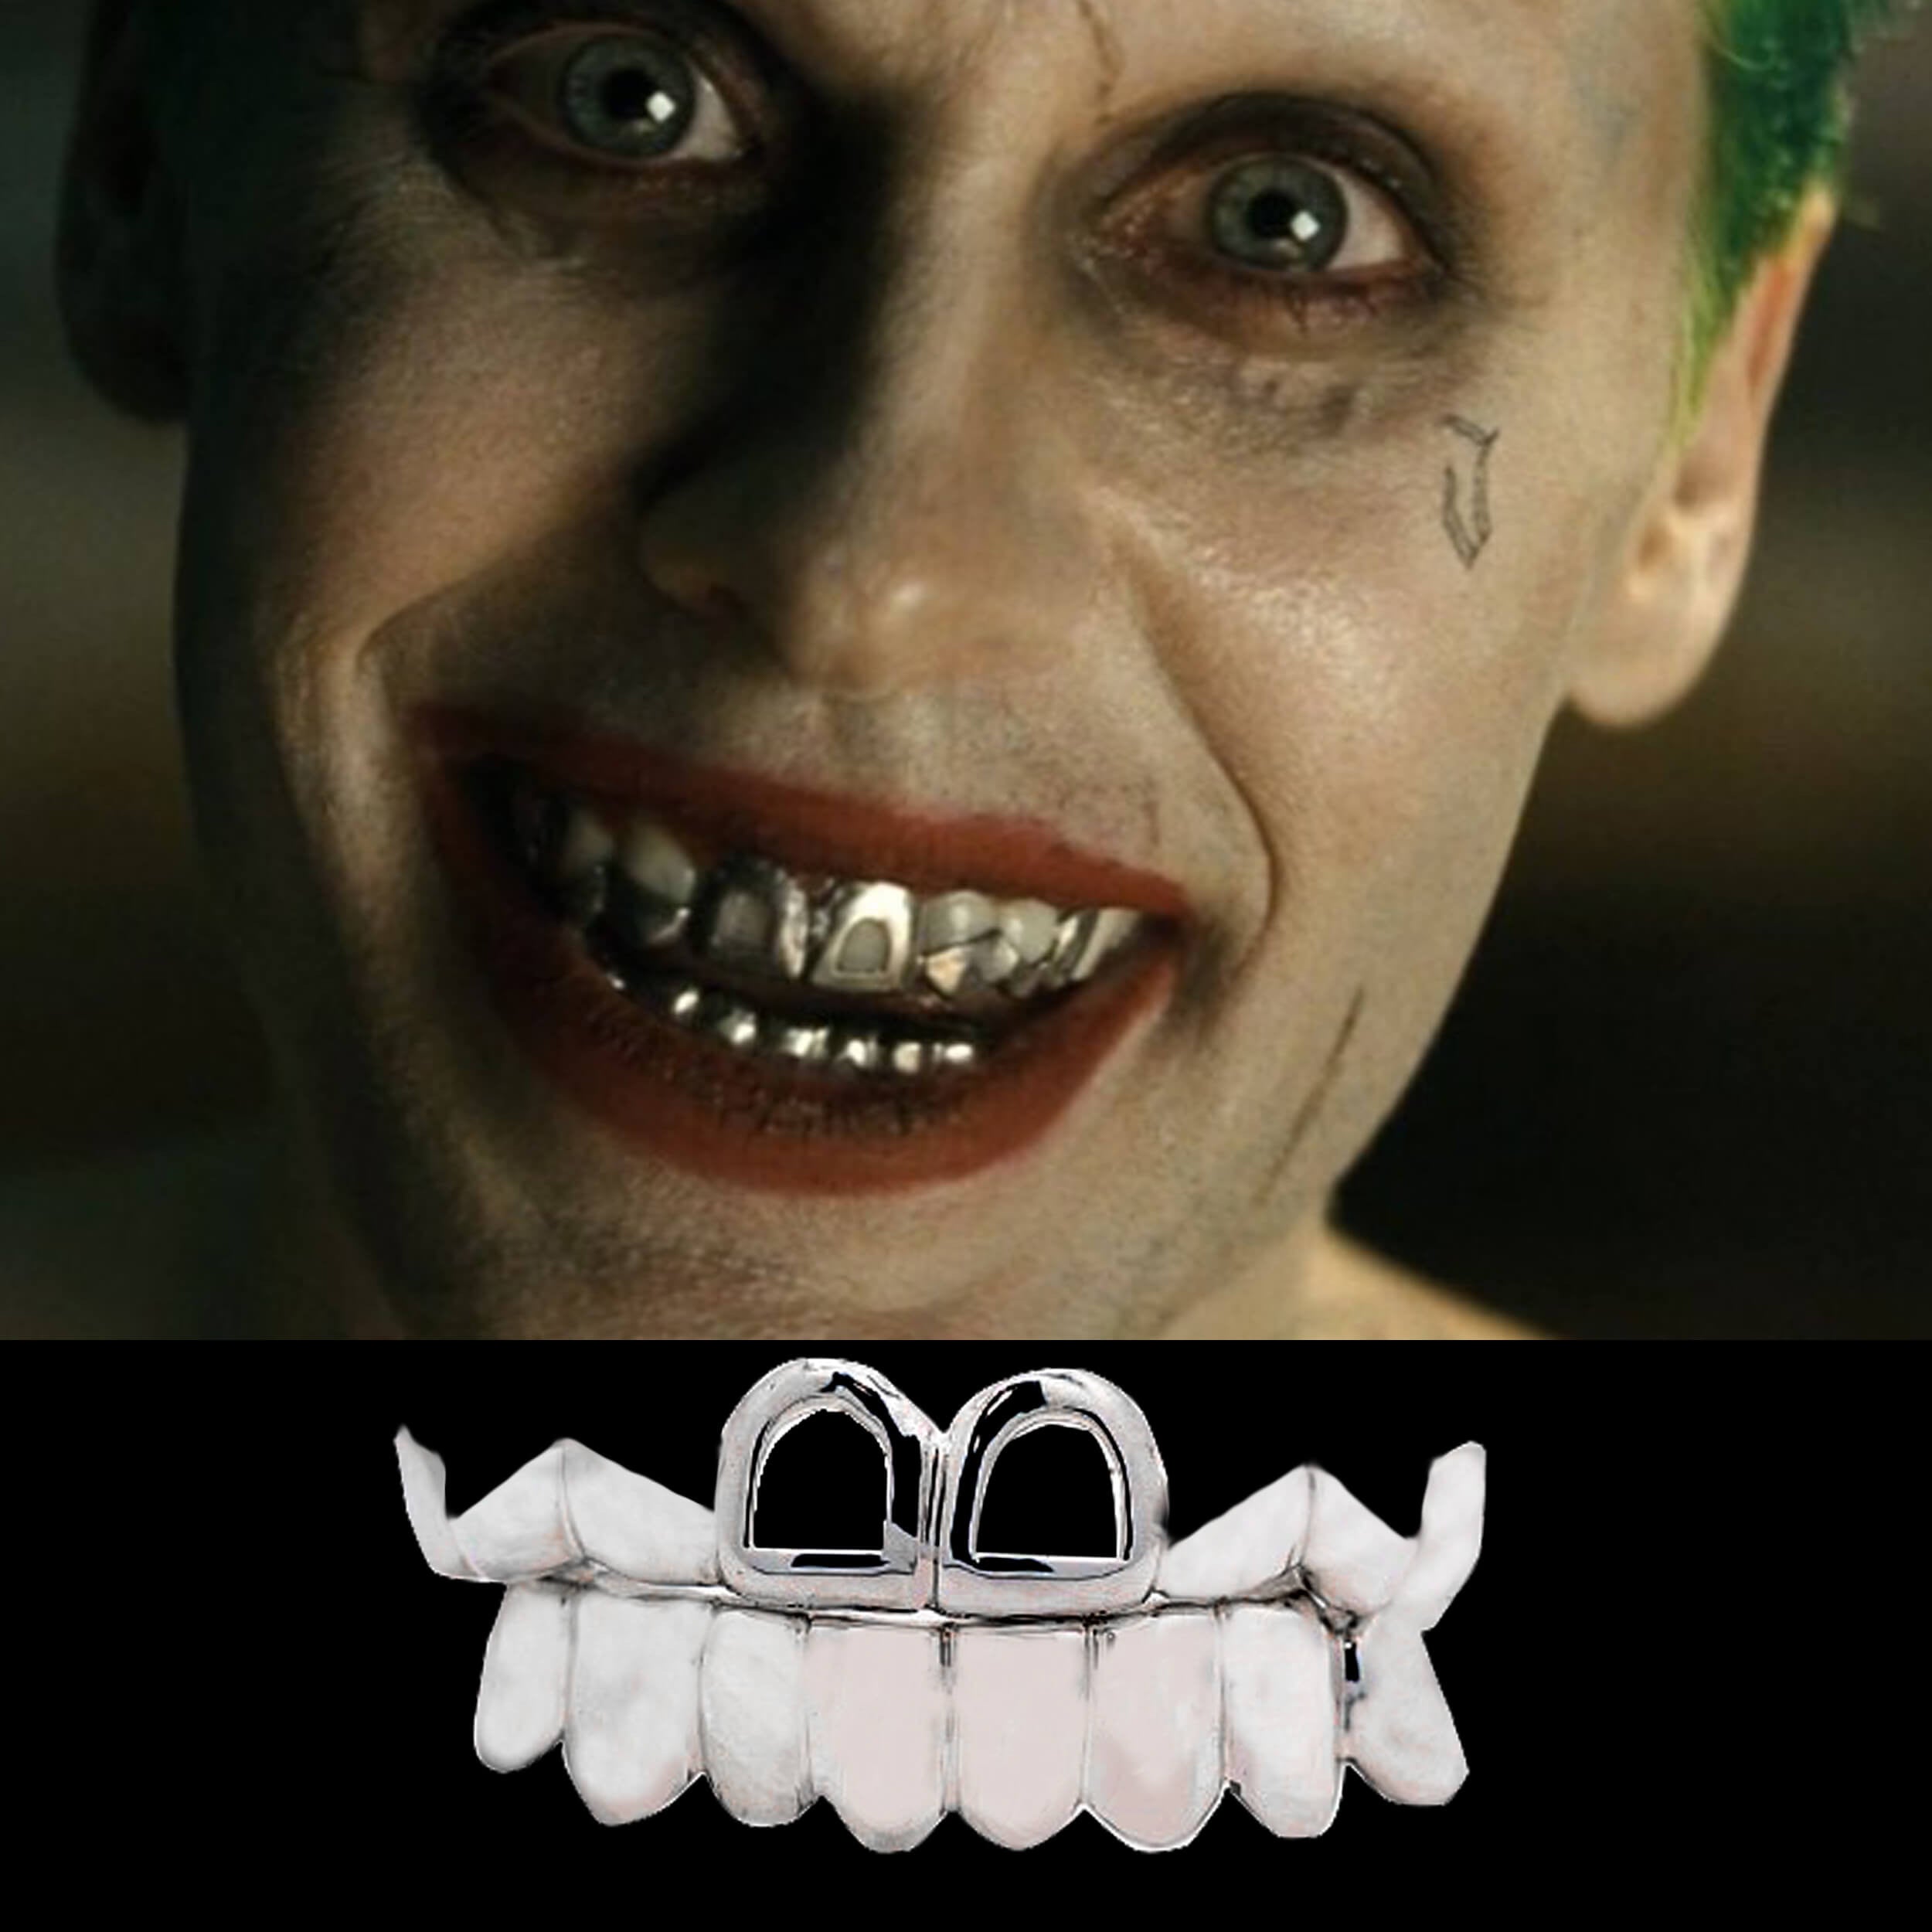 Custom Silver Teeth Joker Grillz from Suicide Squad